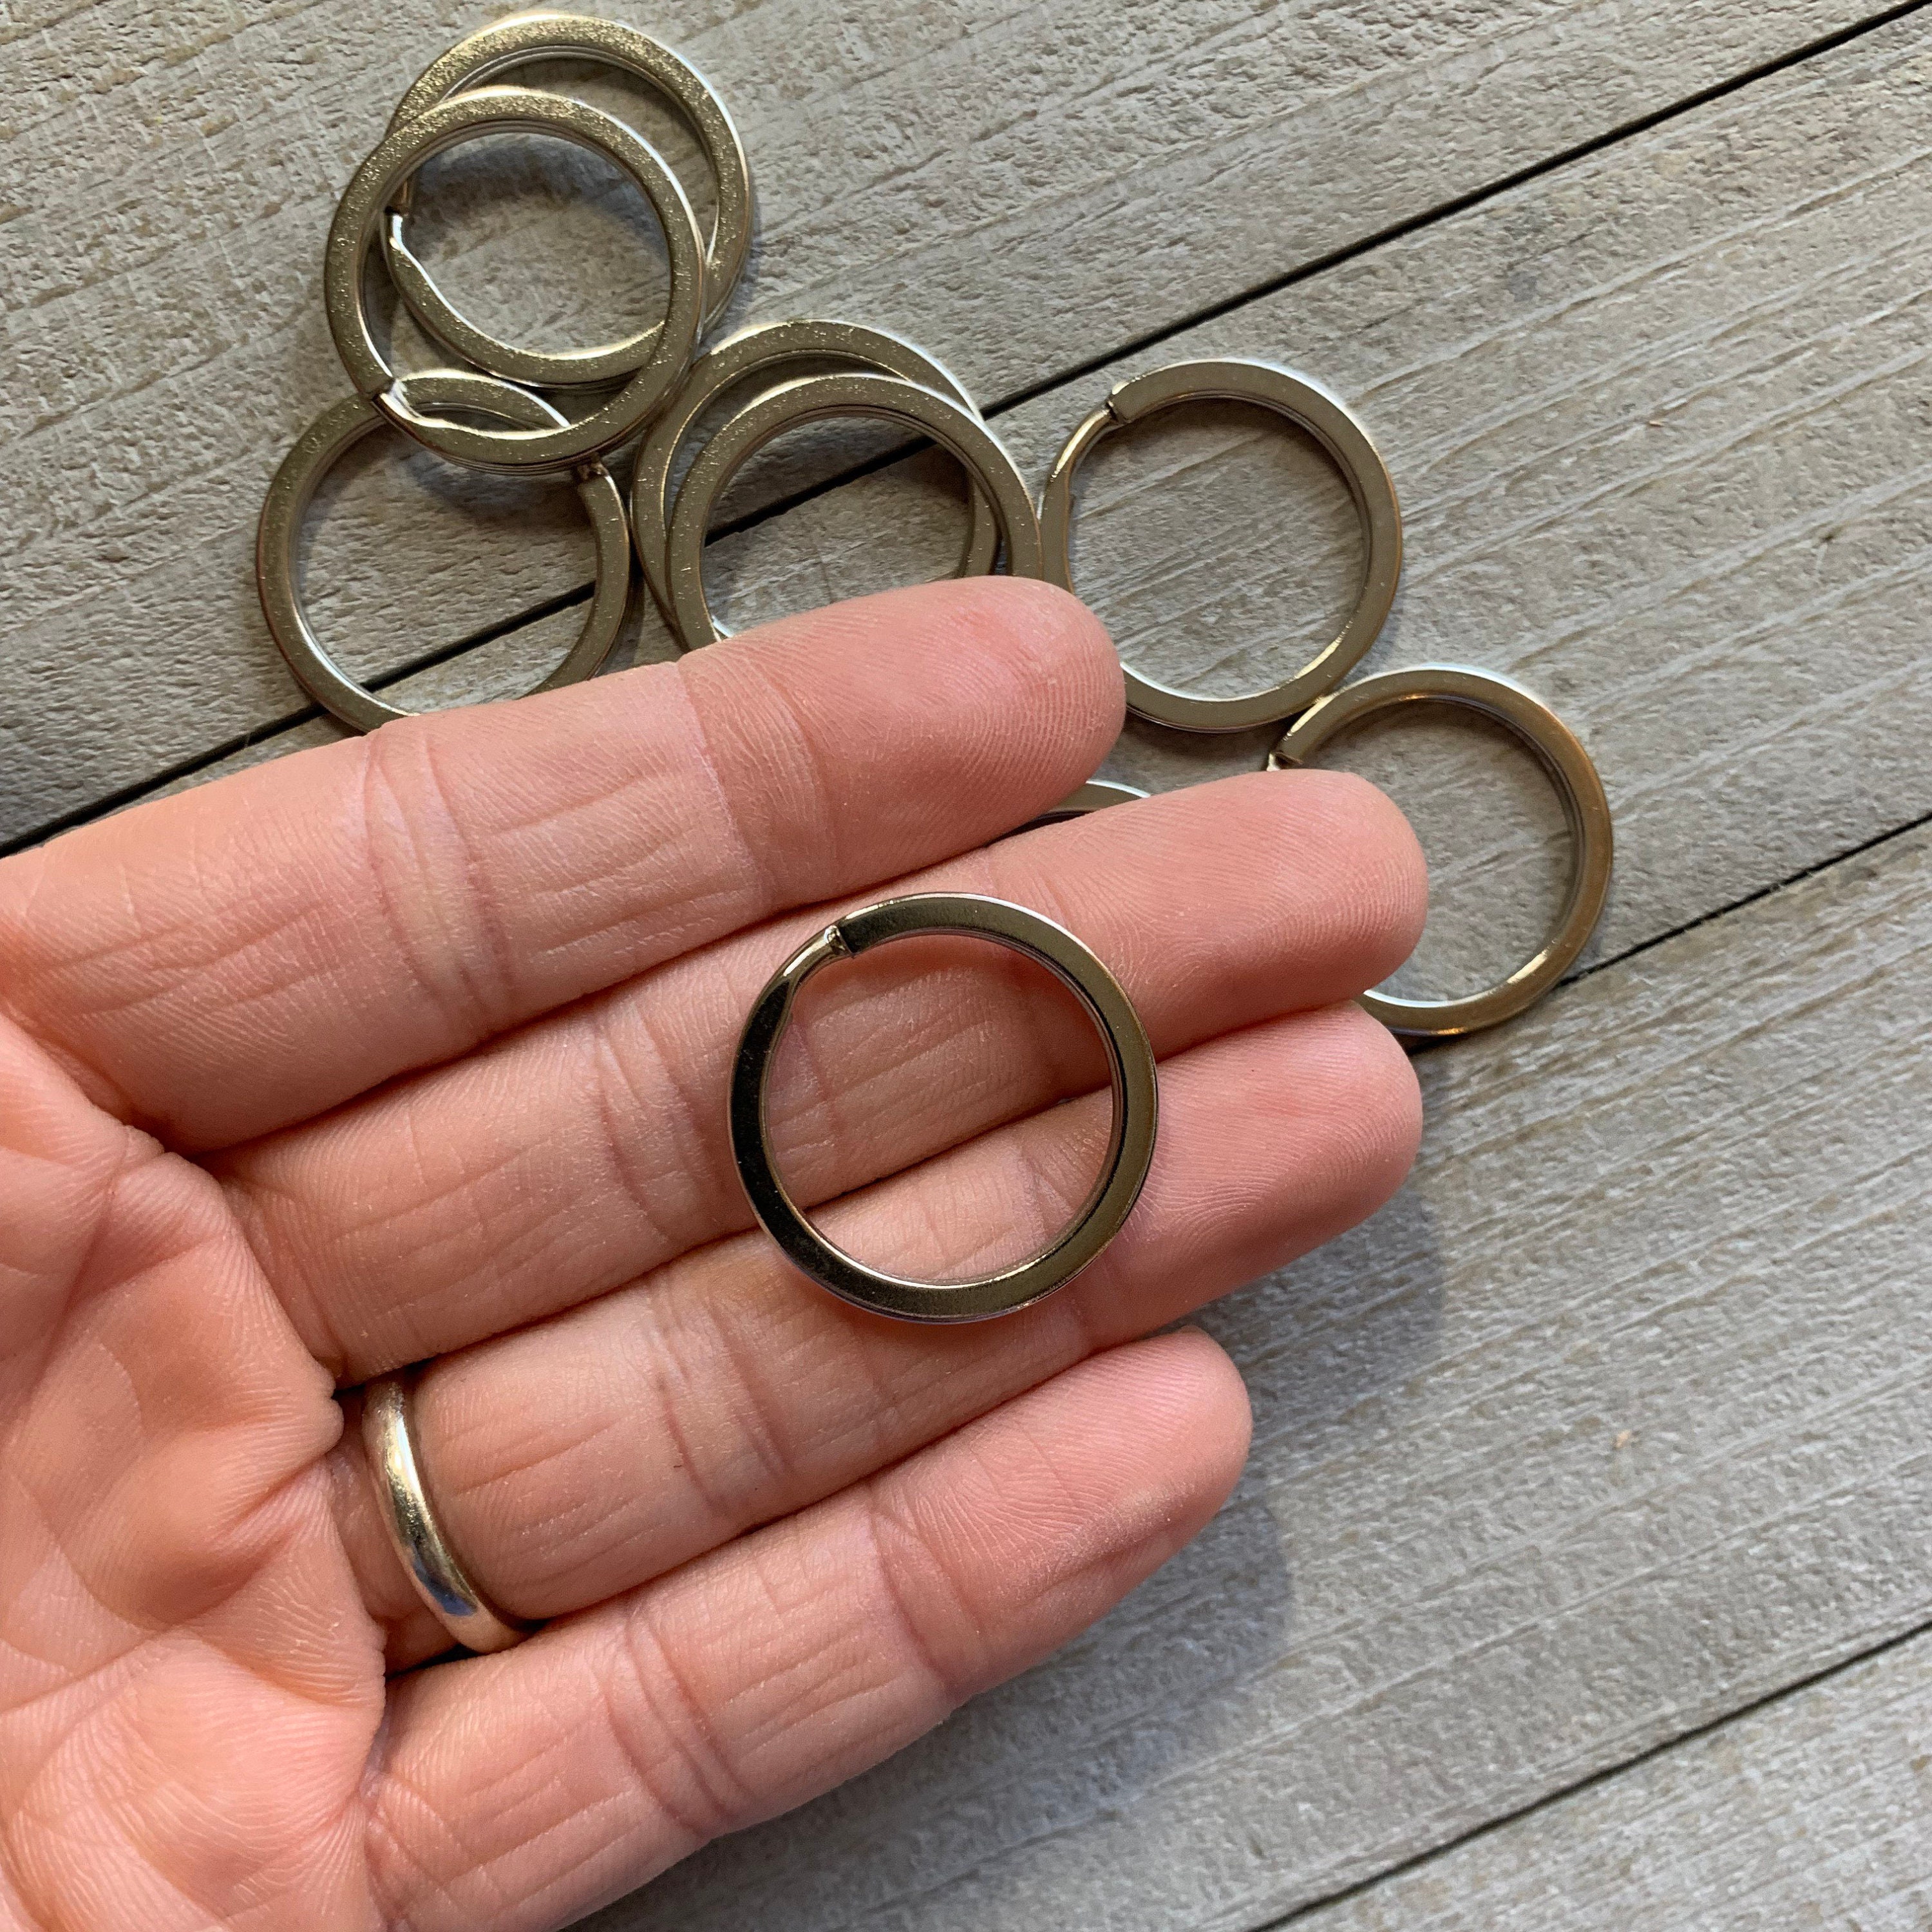 FEGVE Titanium Key Rings Split Rings Non Magnetic Small Keyrings Jump Rings  for Necklaces Keys Jewelry Attachment - 15pcs Mix 10/12/14mm (Black)